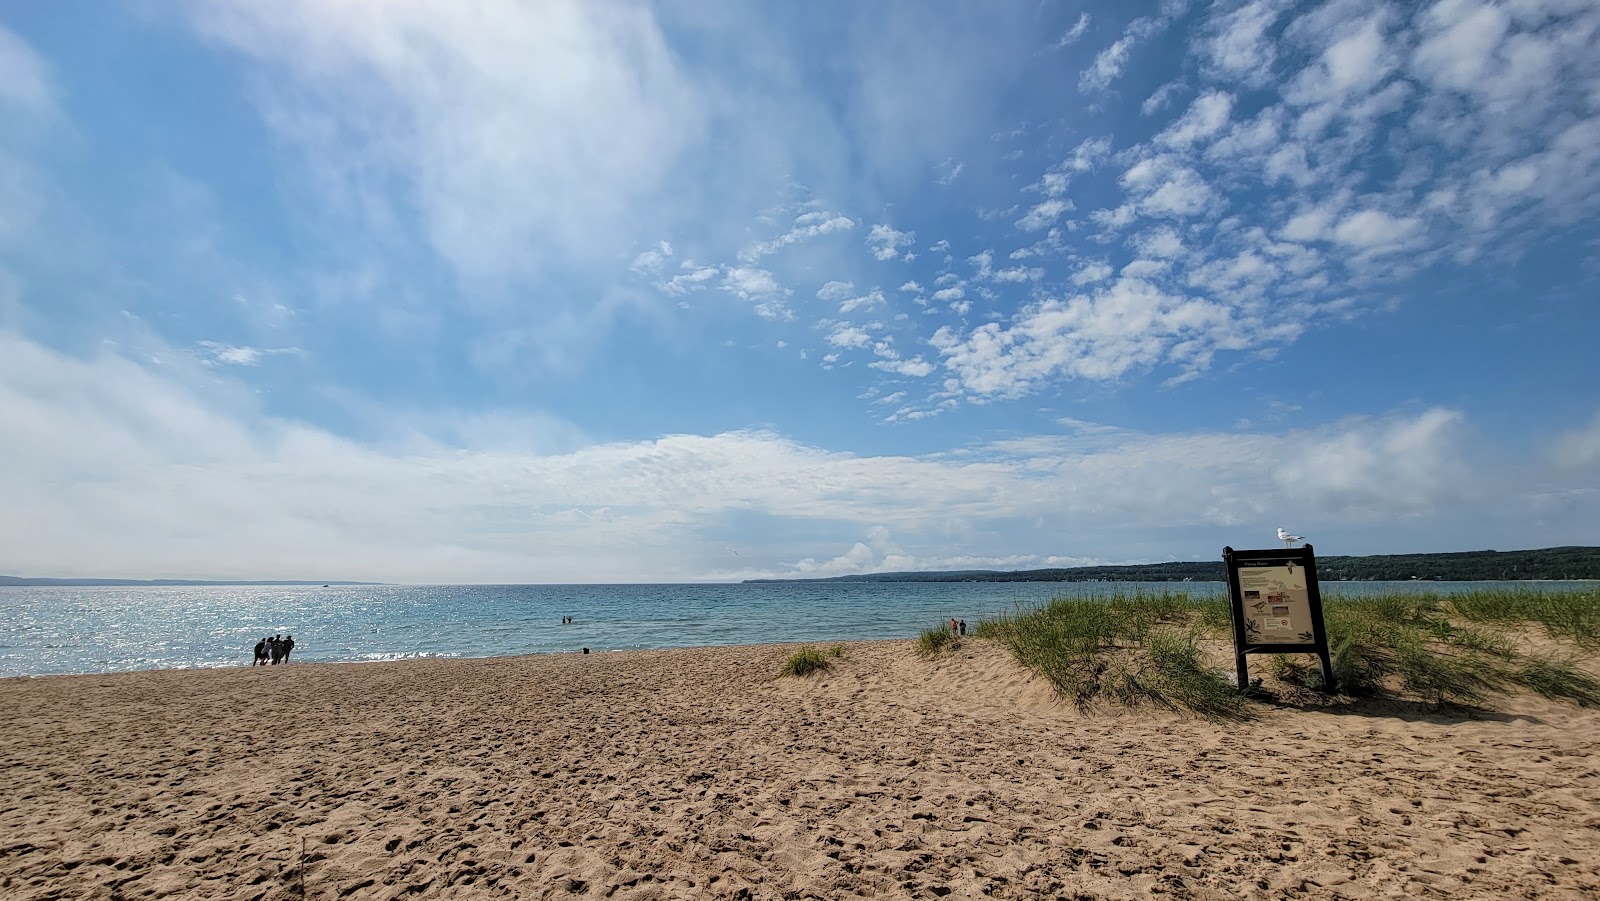 Fotografija Petoskey State Park Beach nahaja se v naravnem okolju